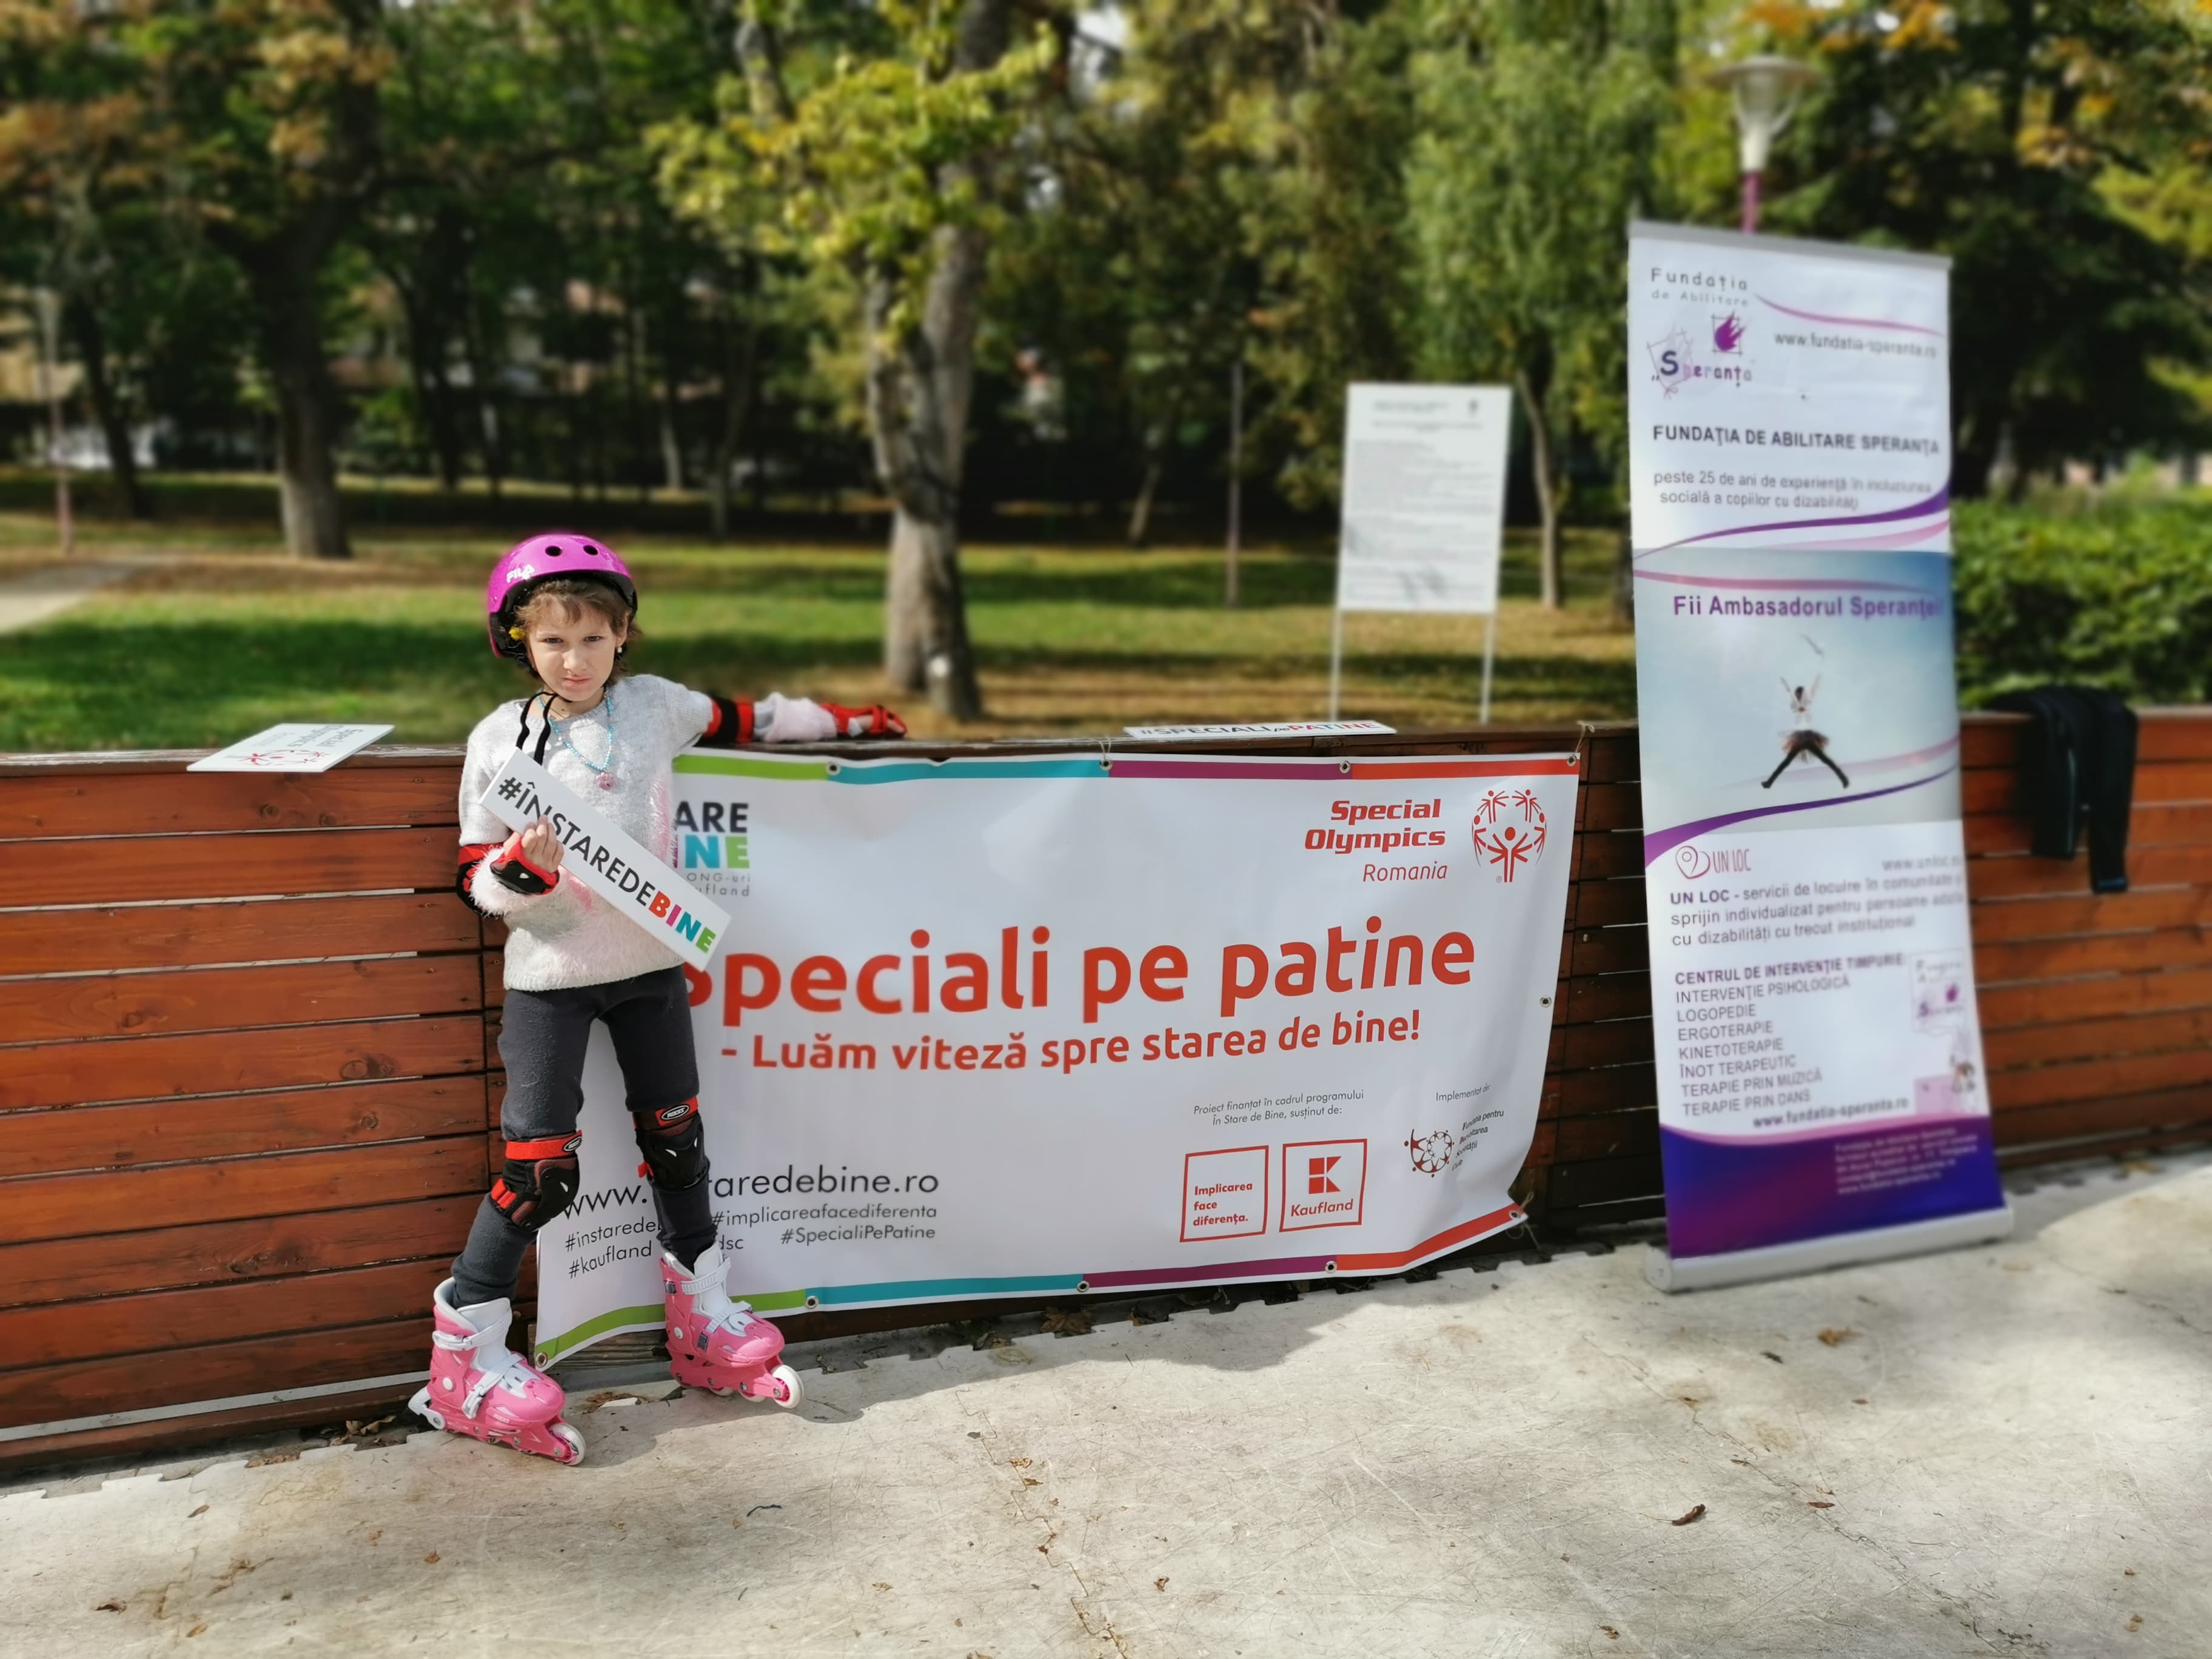 Speciali pe patine, Special Olympics, Timisoara (6)